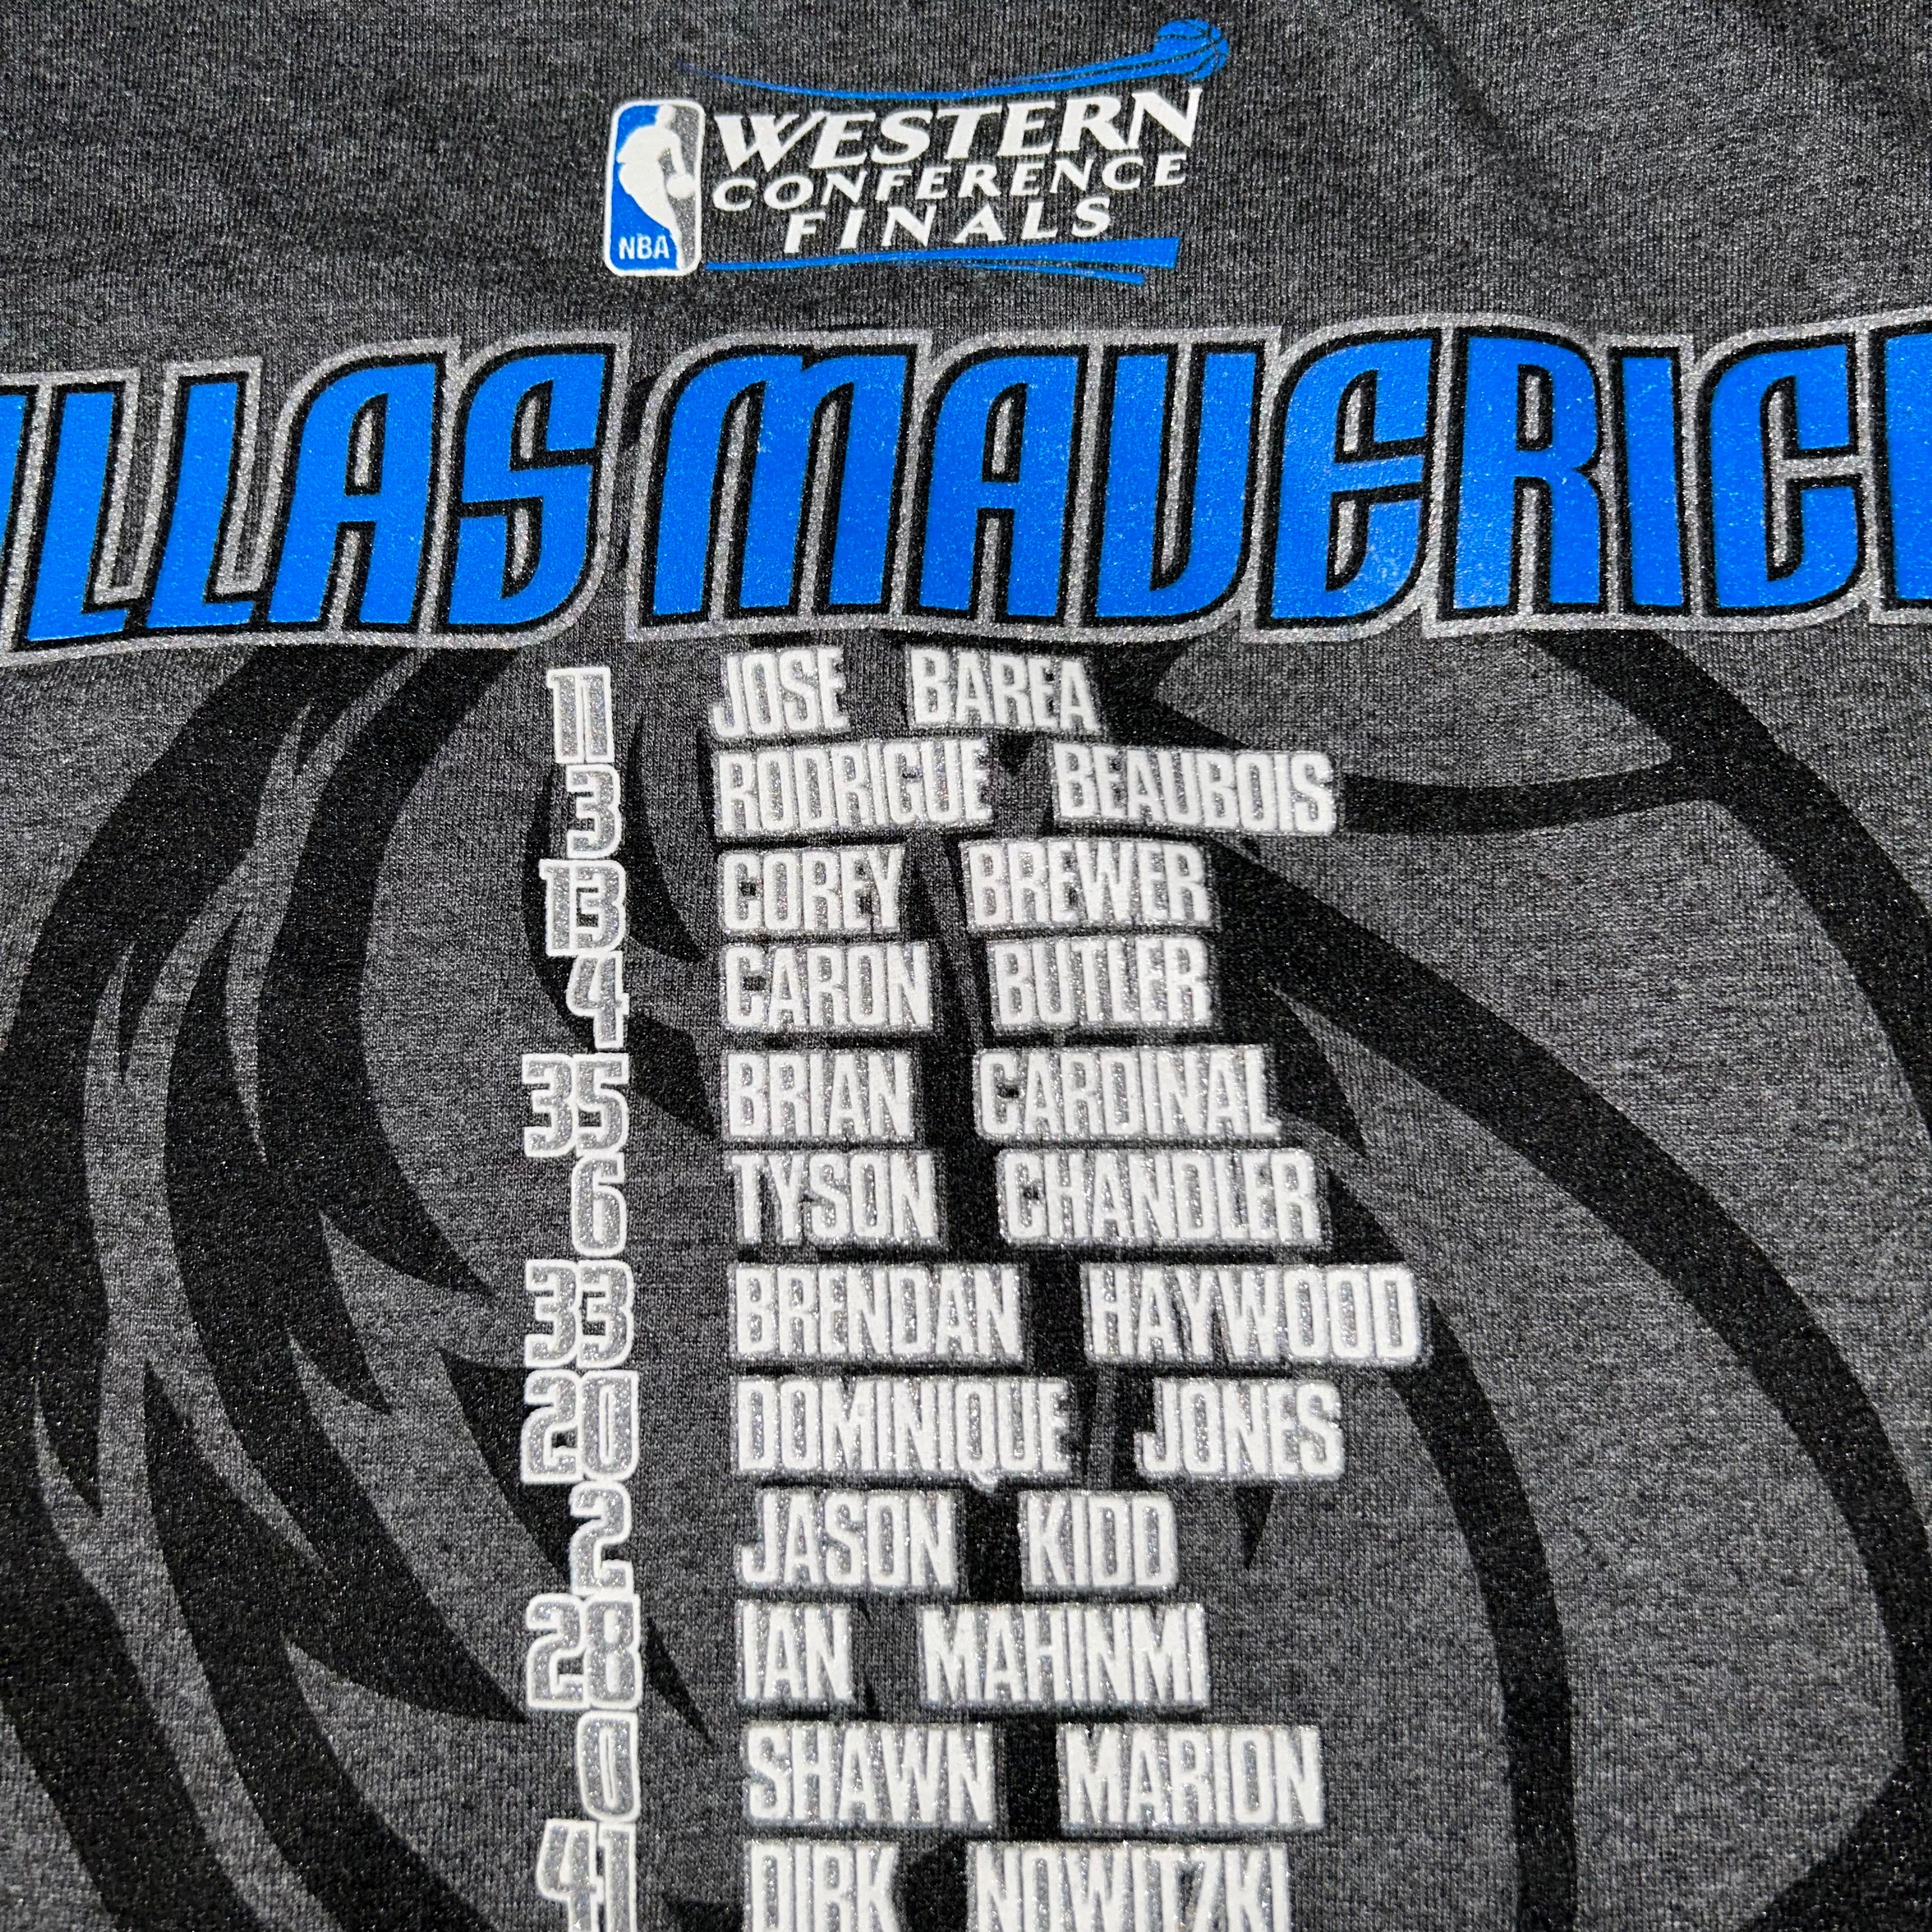 T-shirt Dallas Mavericks NBA  (S)